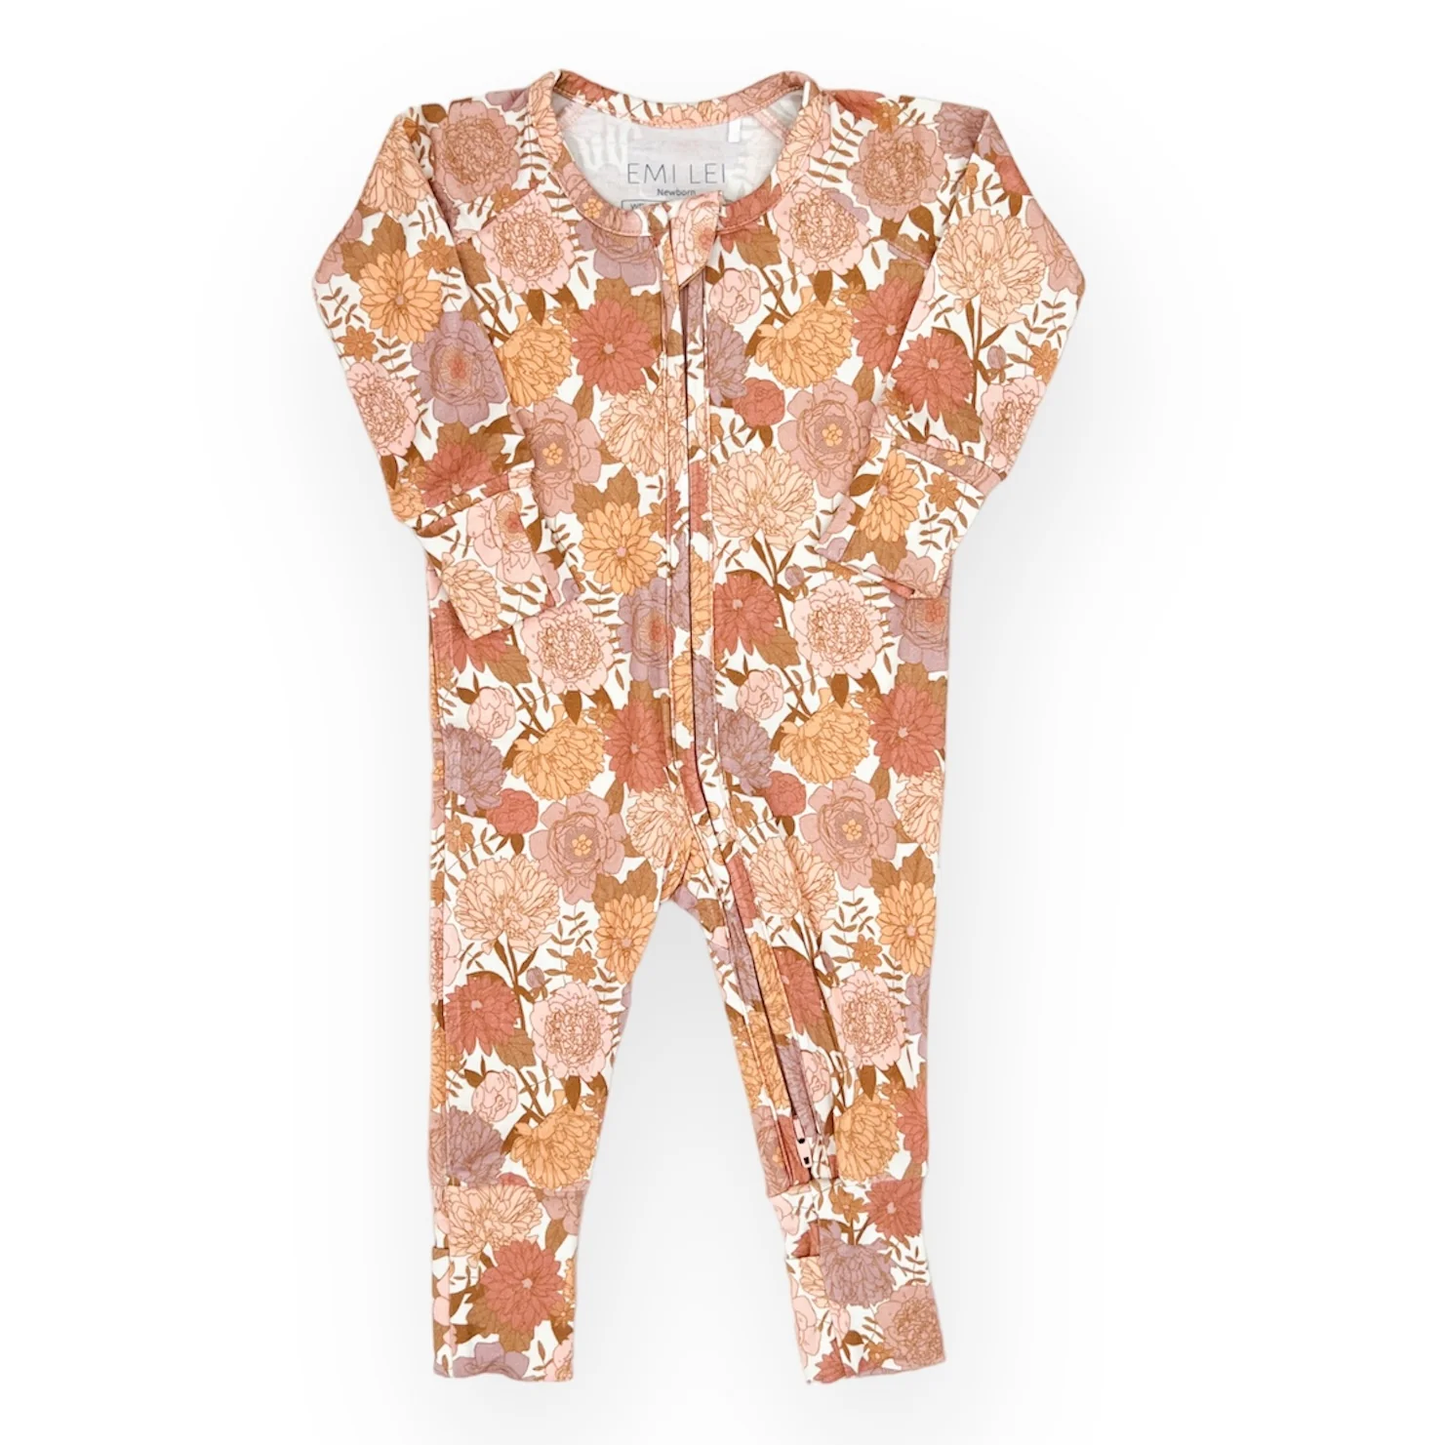 Bamboo Convertible Baby Footie Romper Pajama - Boho Floral